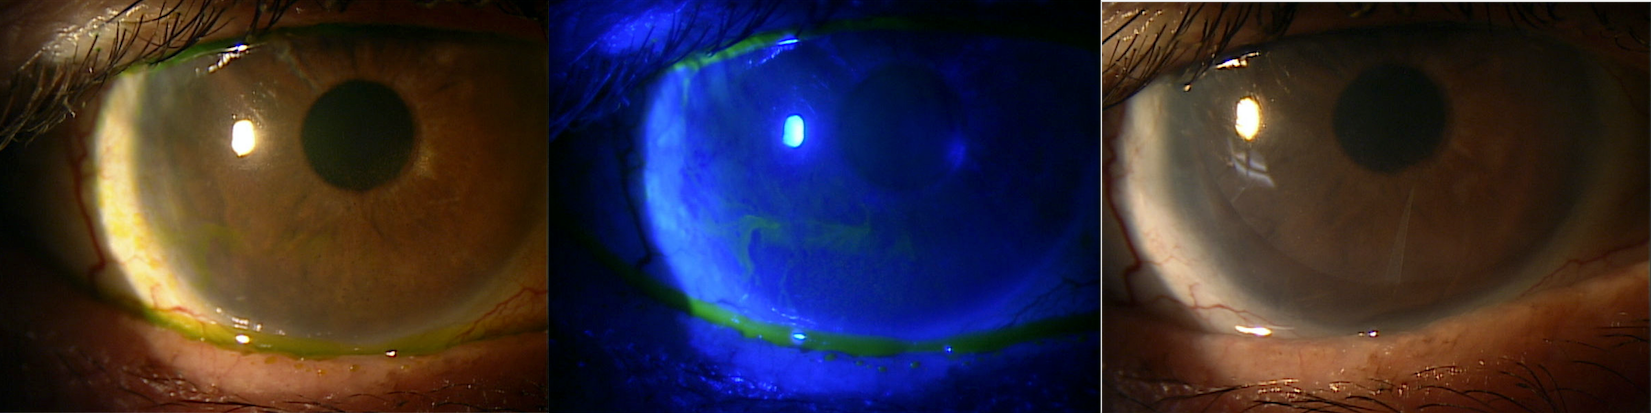  Amniotic membrane grafts help ocular surface disease